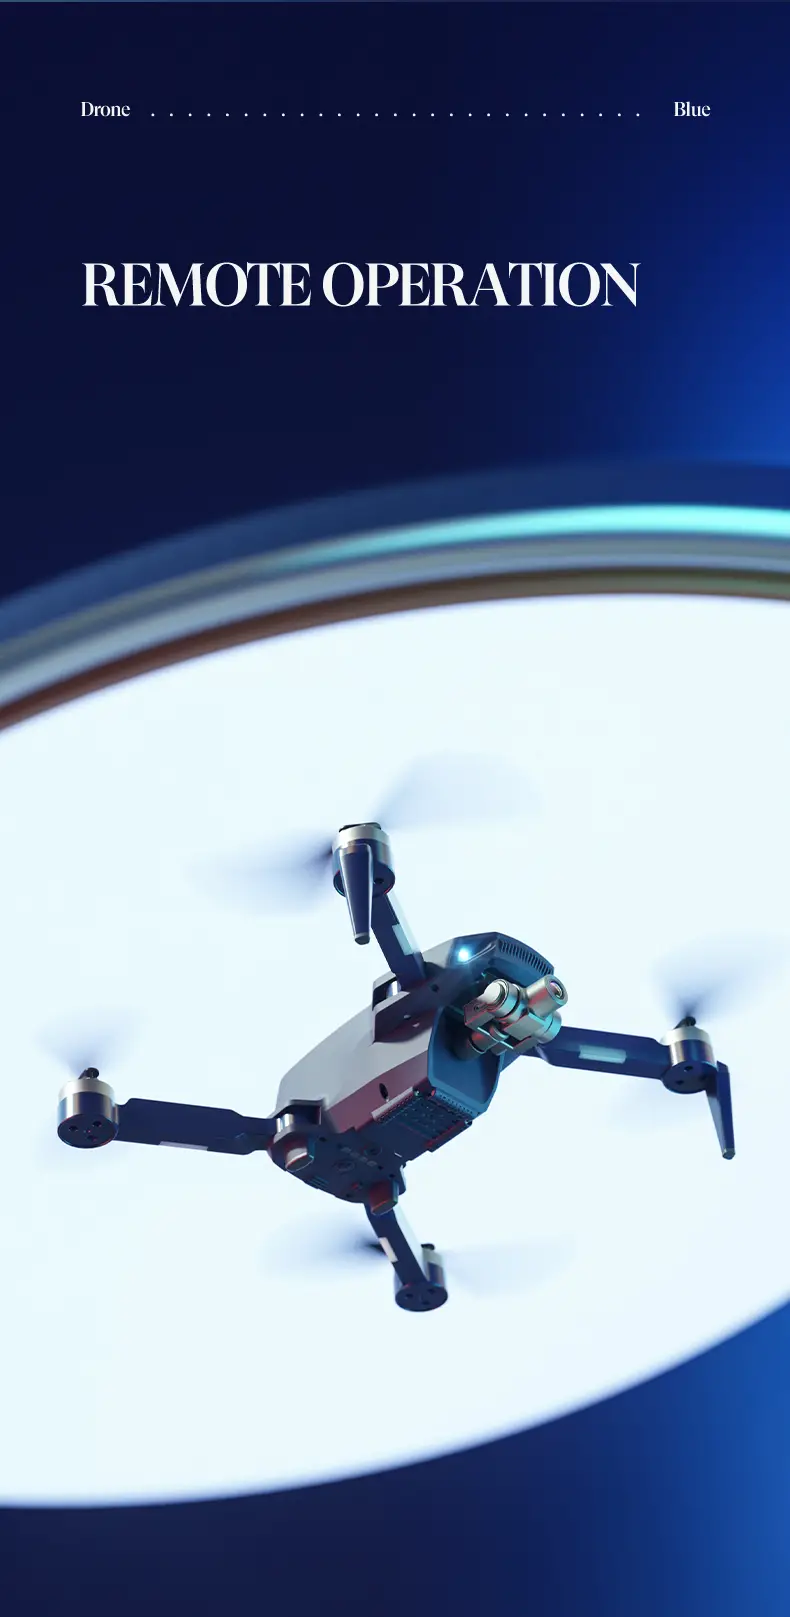 drone with hd camera gps ultrasonic positioning intelligent return smart follow brushless motor waypoint flight smart follow gesture control wind resistance details 11